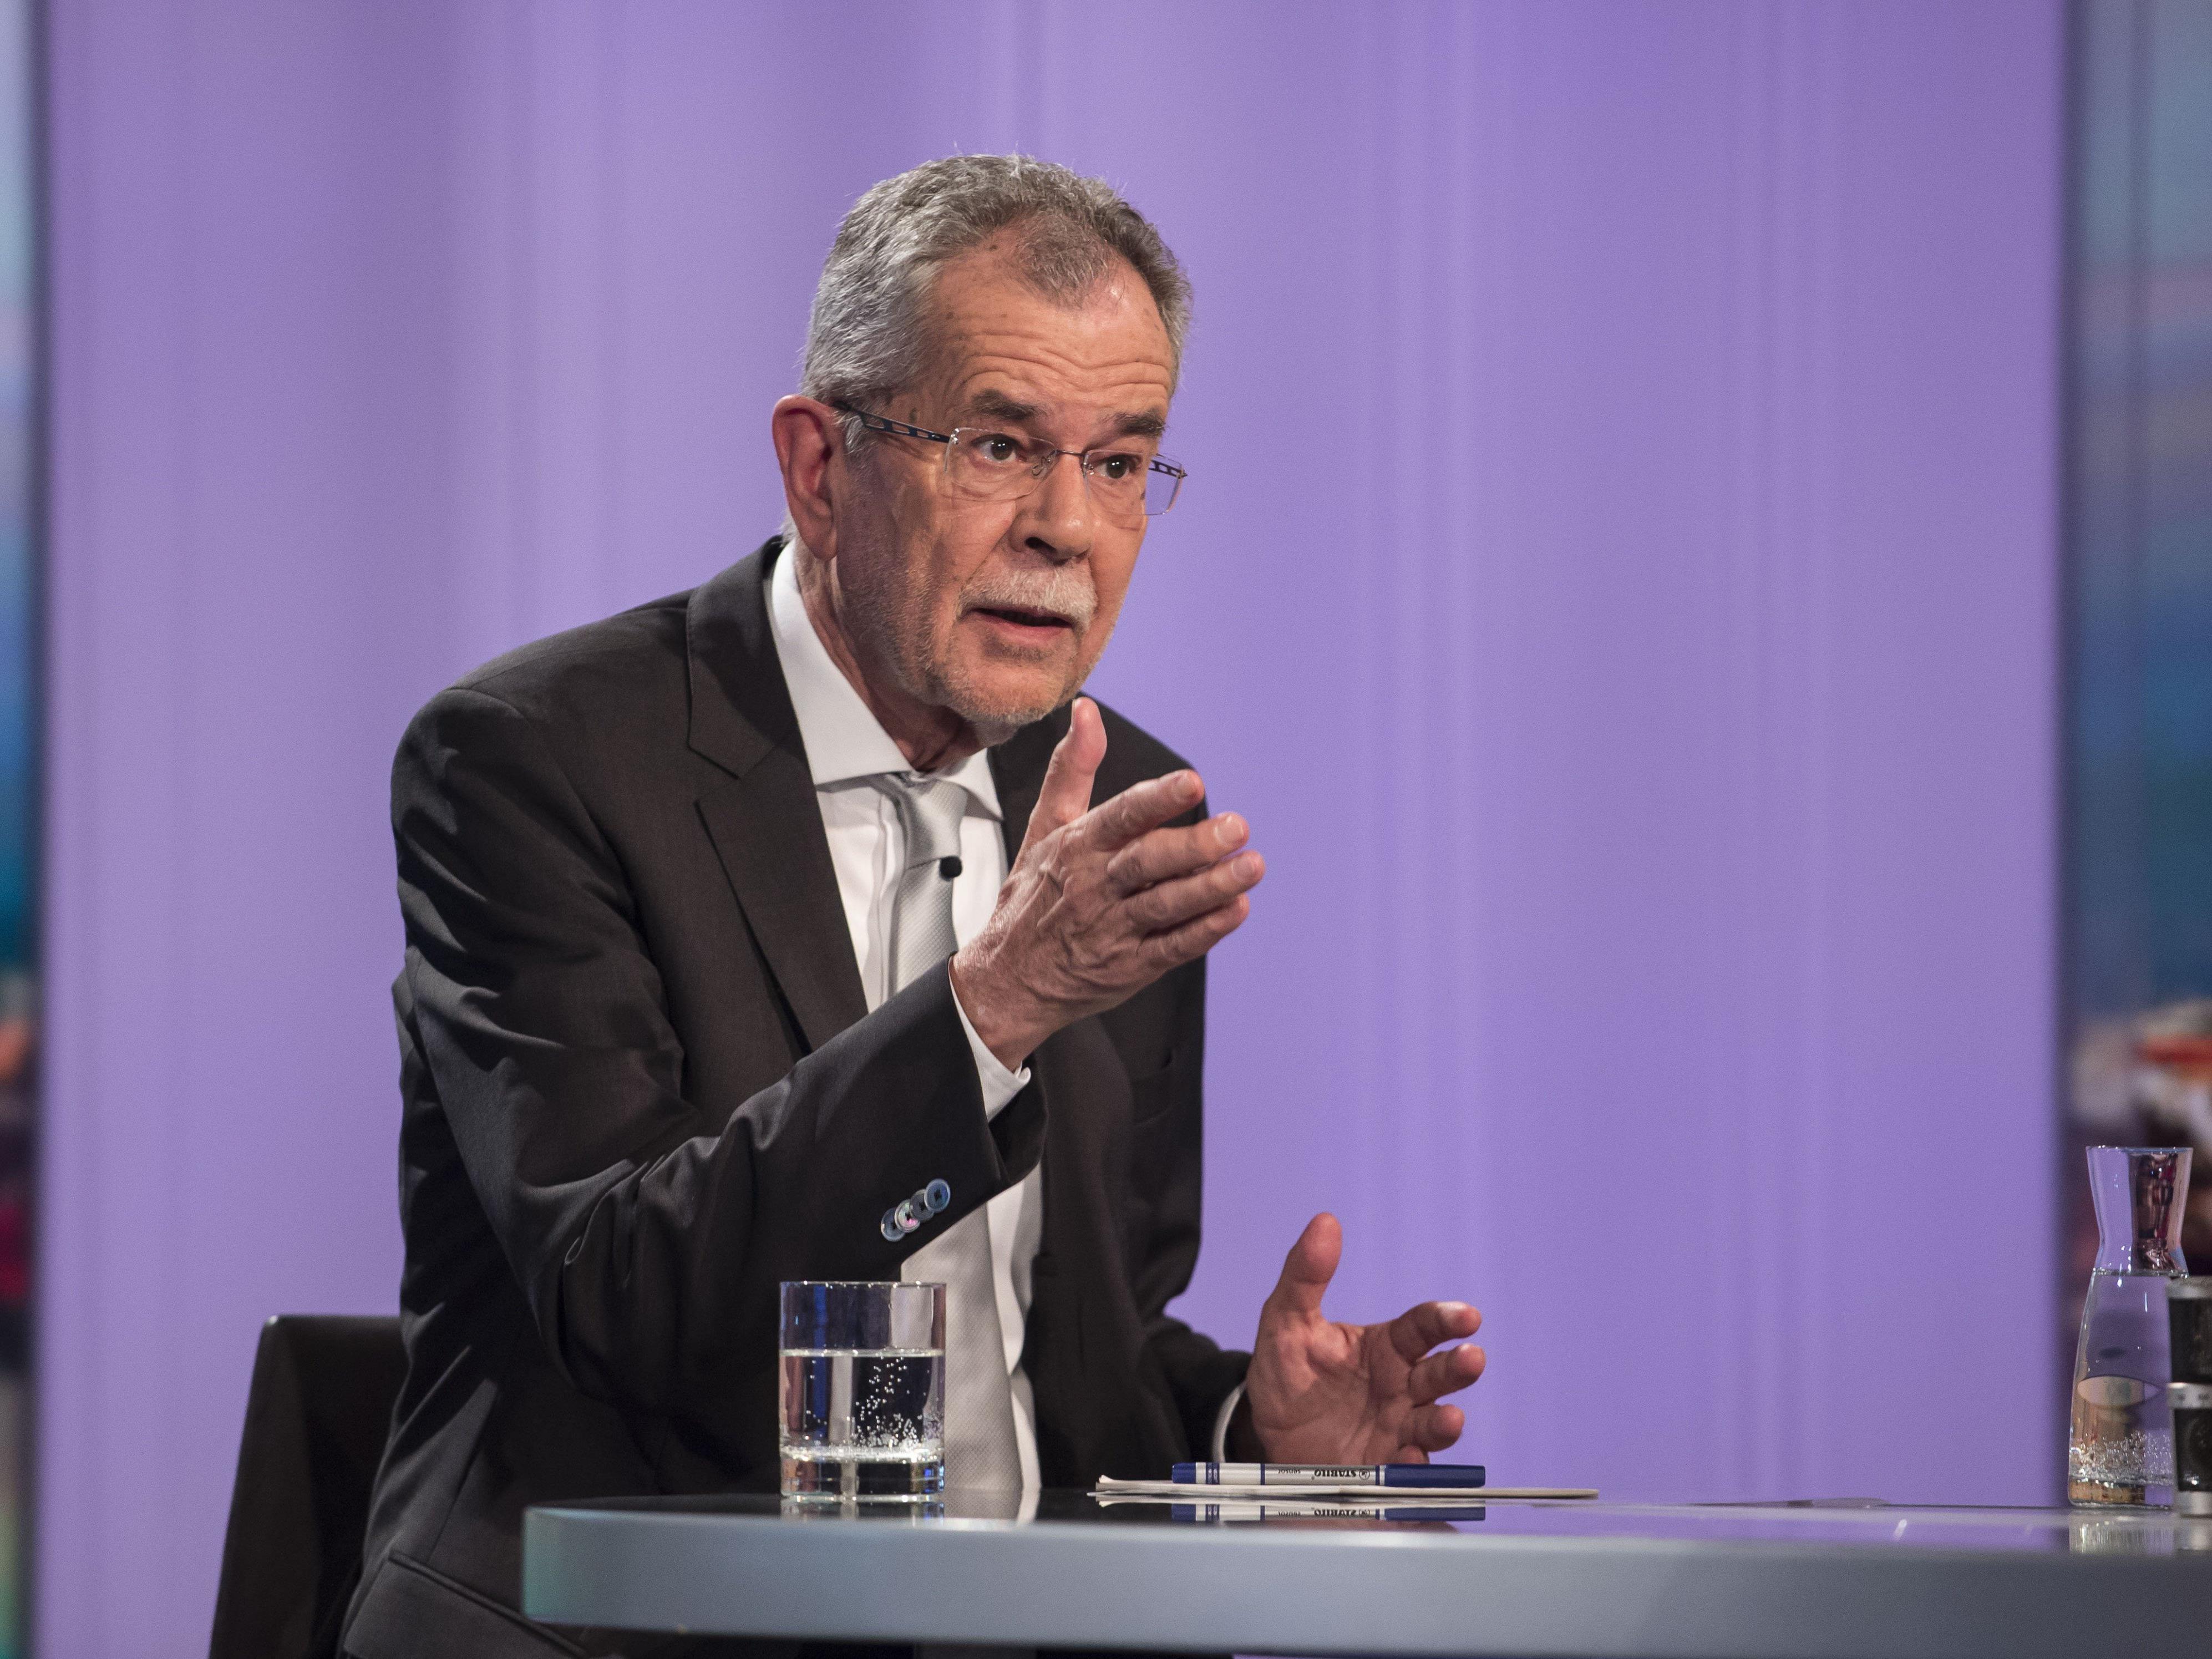 BP-Wahl - Flüchtlingskrise dominierte Pressestunde mit Van der Bellen